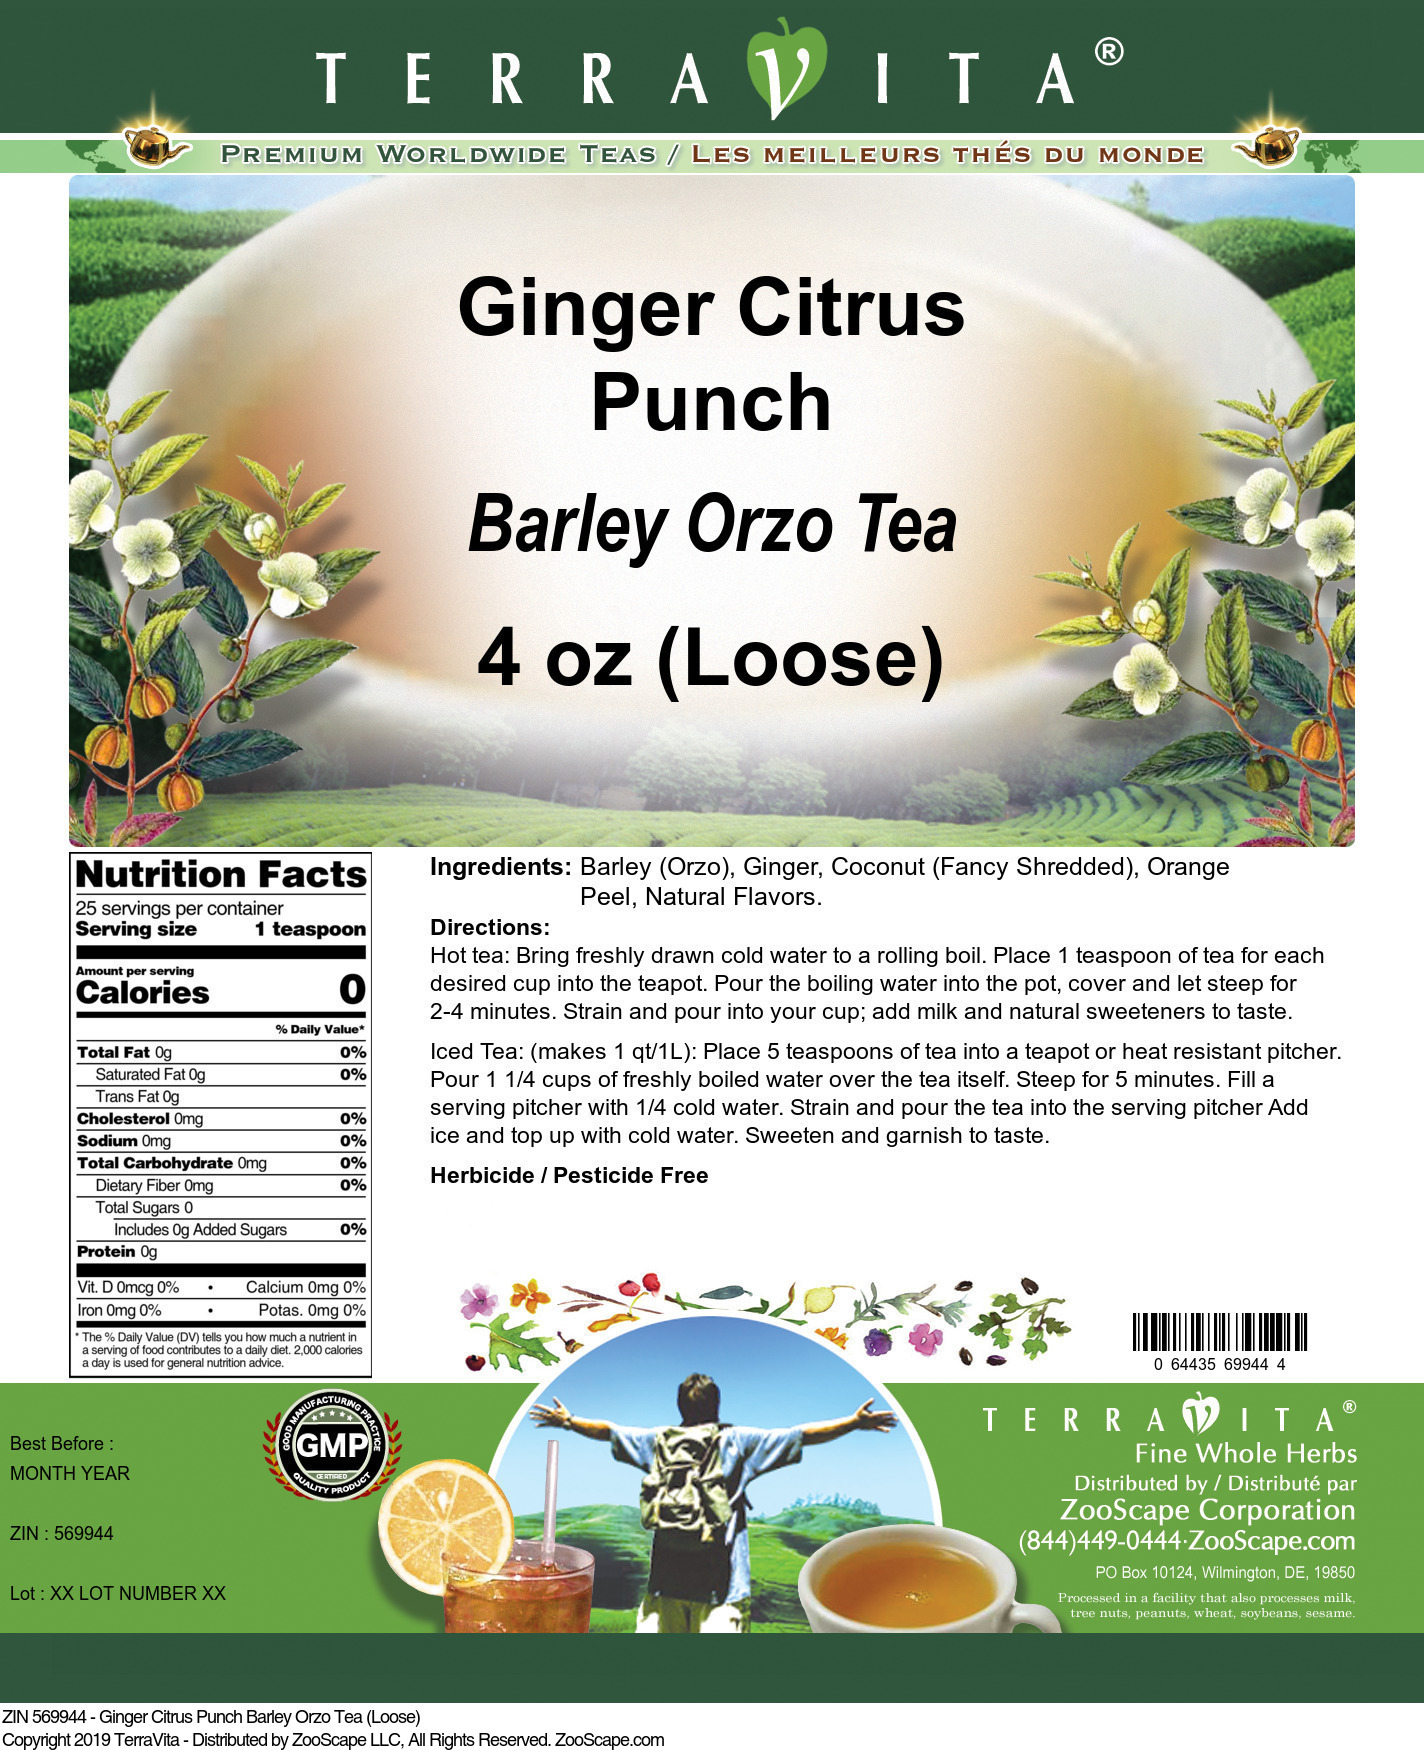 Ginger Citrus Punch Barley Orzo Tea (Loose) - Label